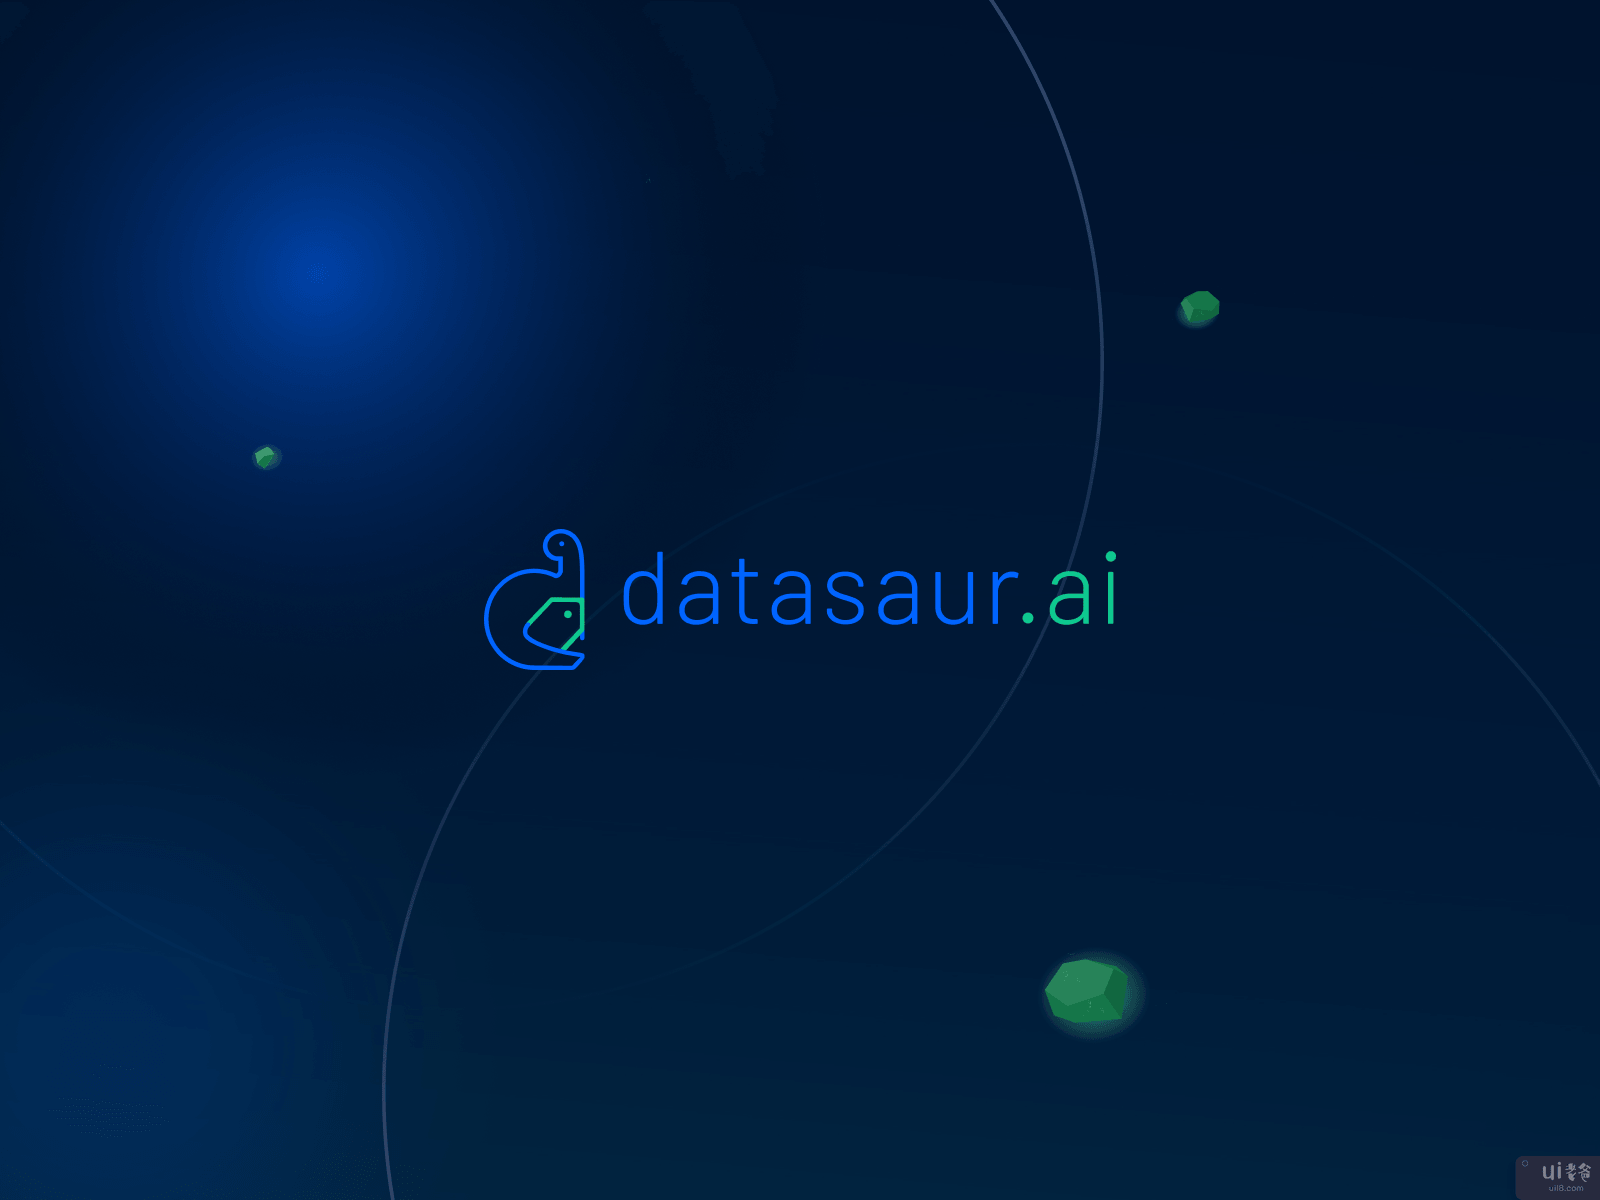 Datasaur.ai - 网站设计(Datasaur.ai - Website Design)插图2